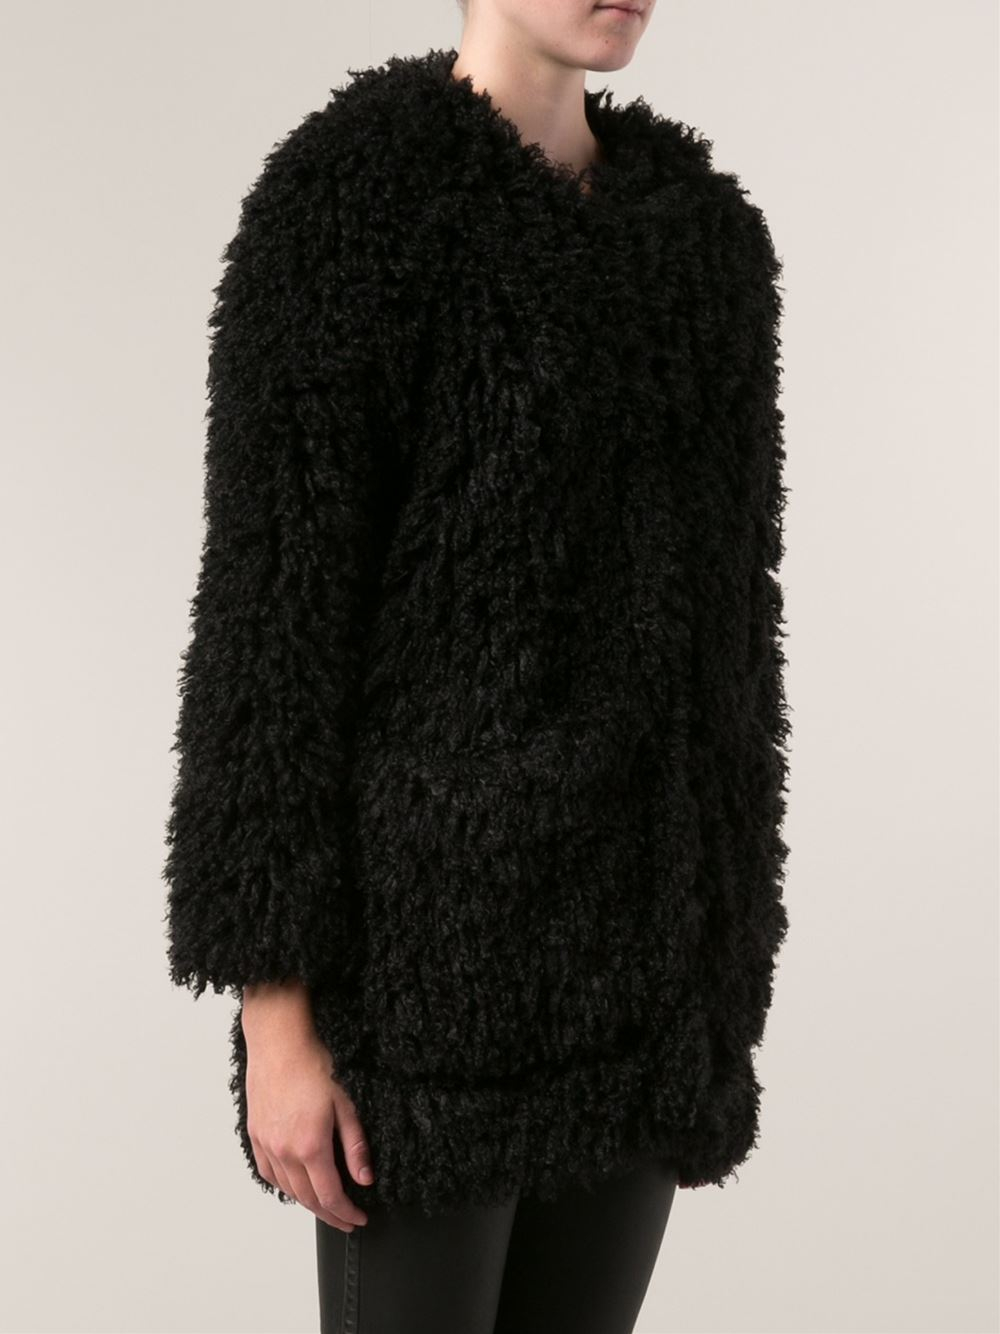 Lyst - Smythe Fuzzy Jacket in Black